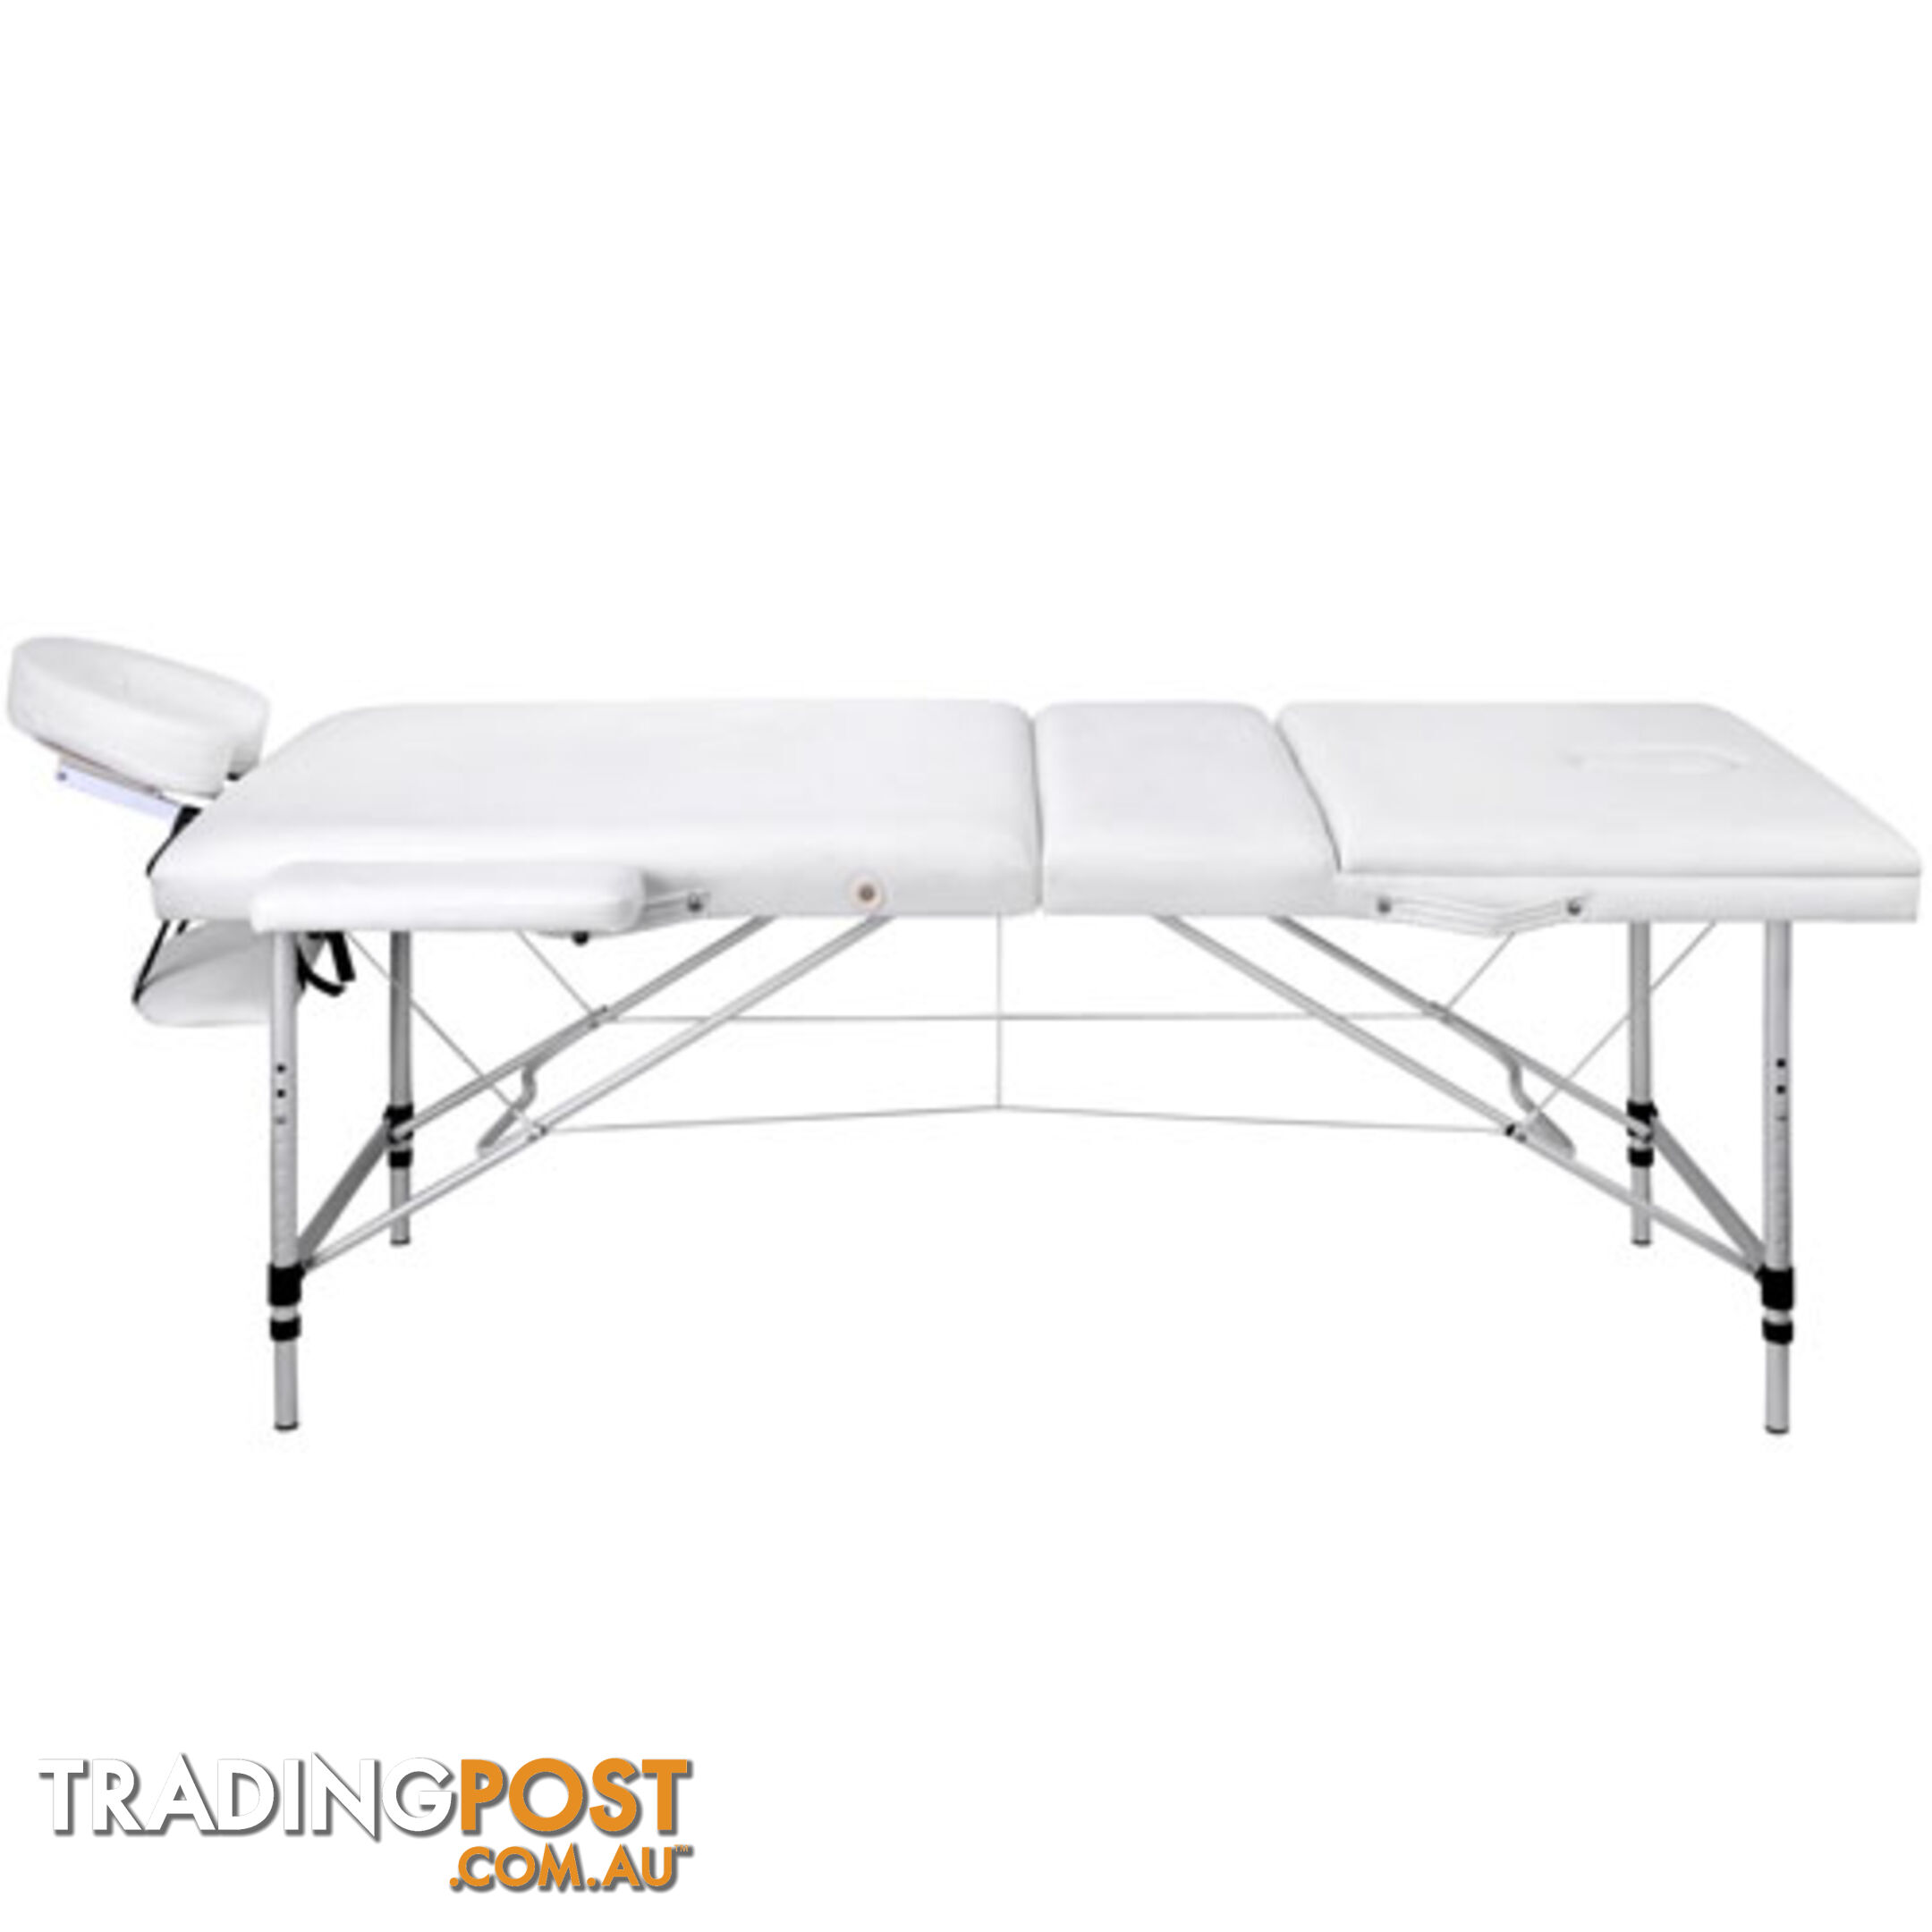 Portable Aluminium 3 Fold Massage Table Beauty Chair Bed Treatment White 75cm